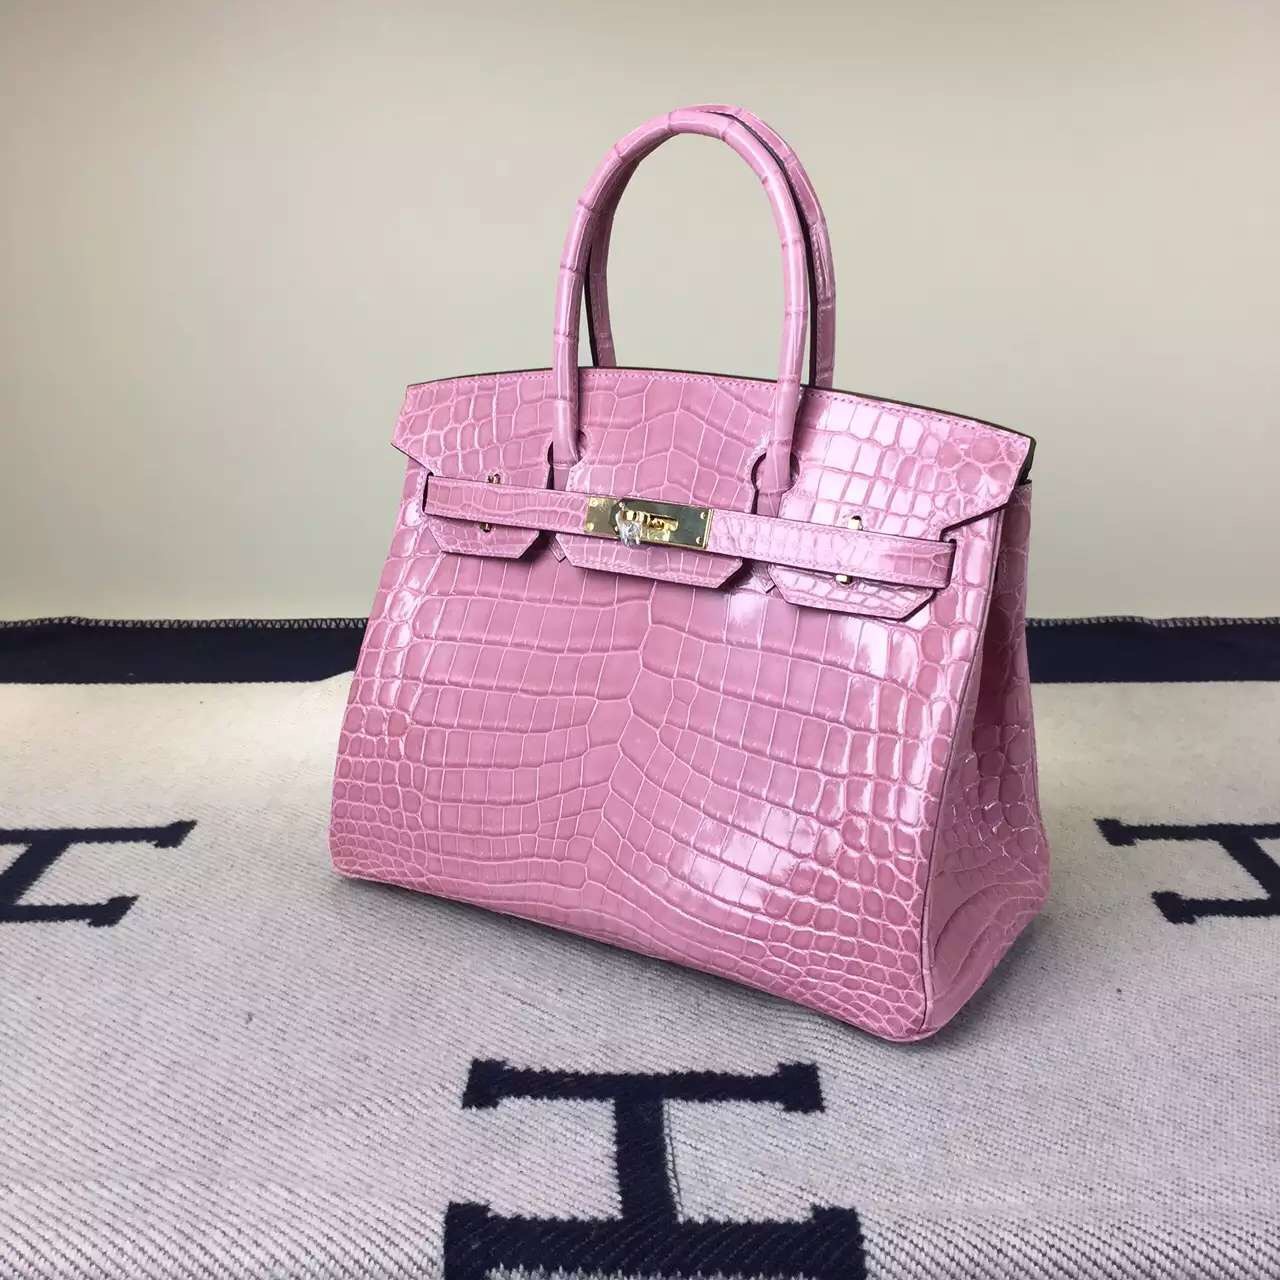 New Pretty Hermes Light Pink Crocodile Shiny Leather Birkin Bag 30cm ...